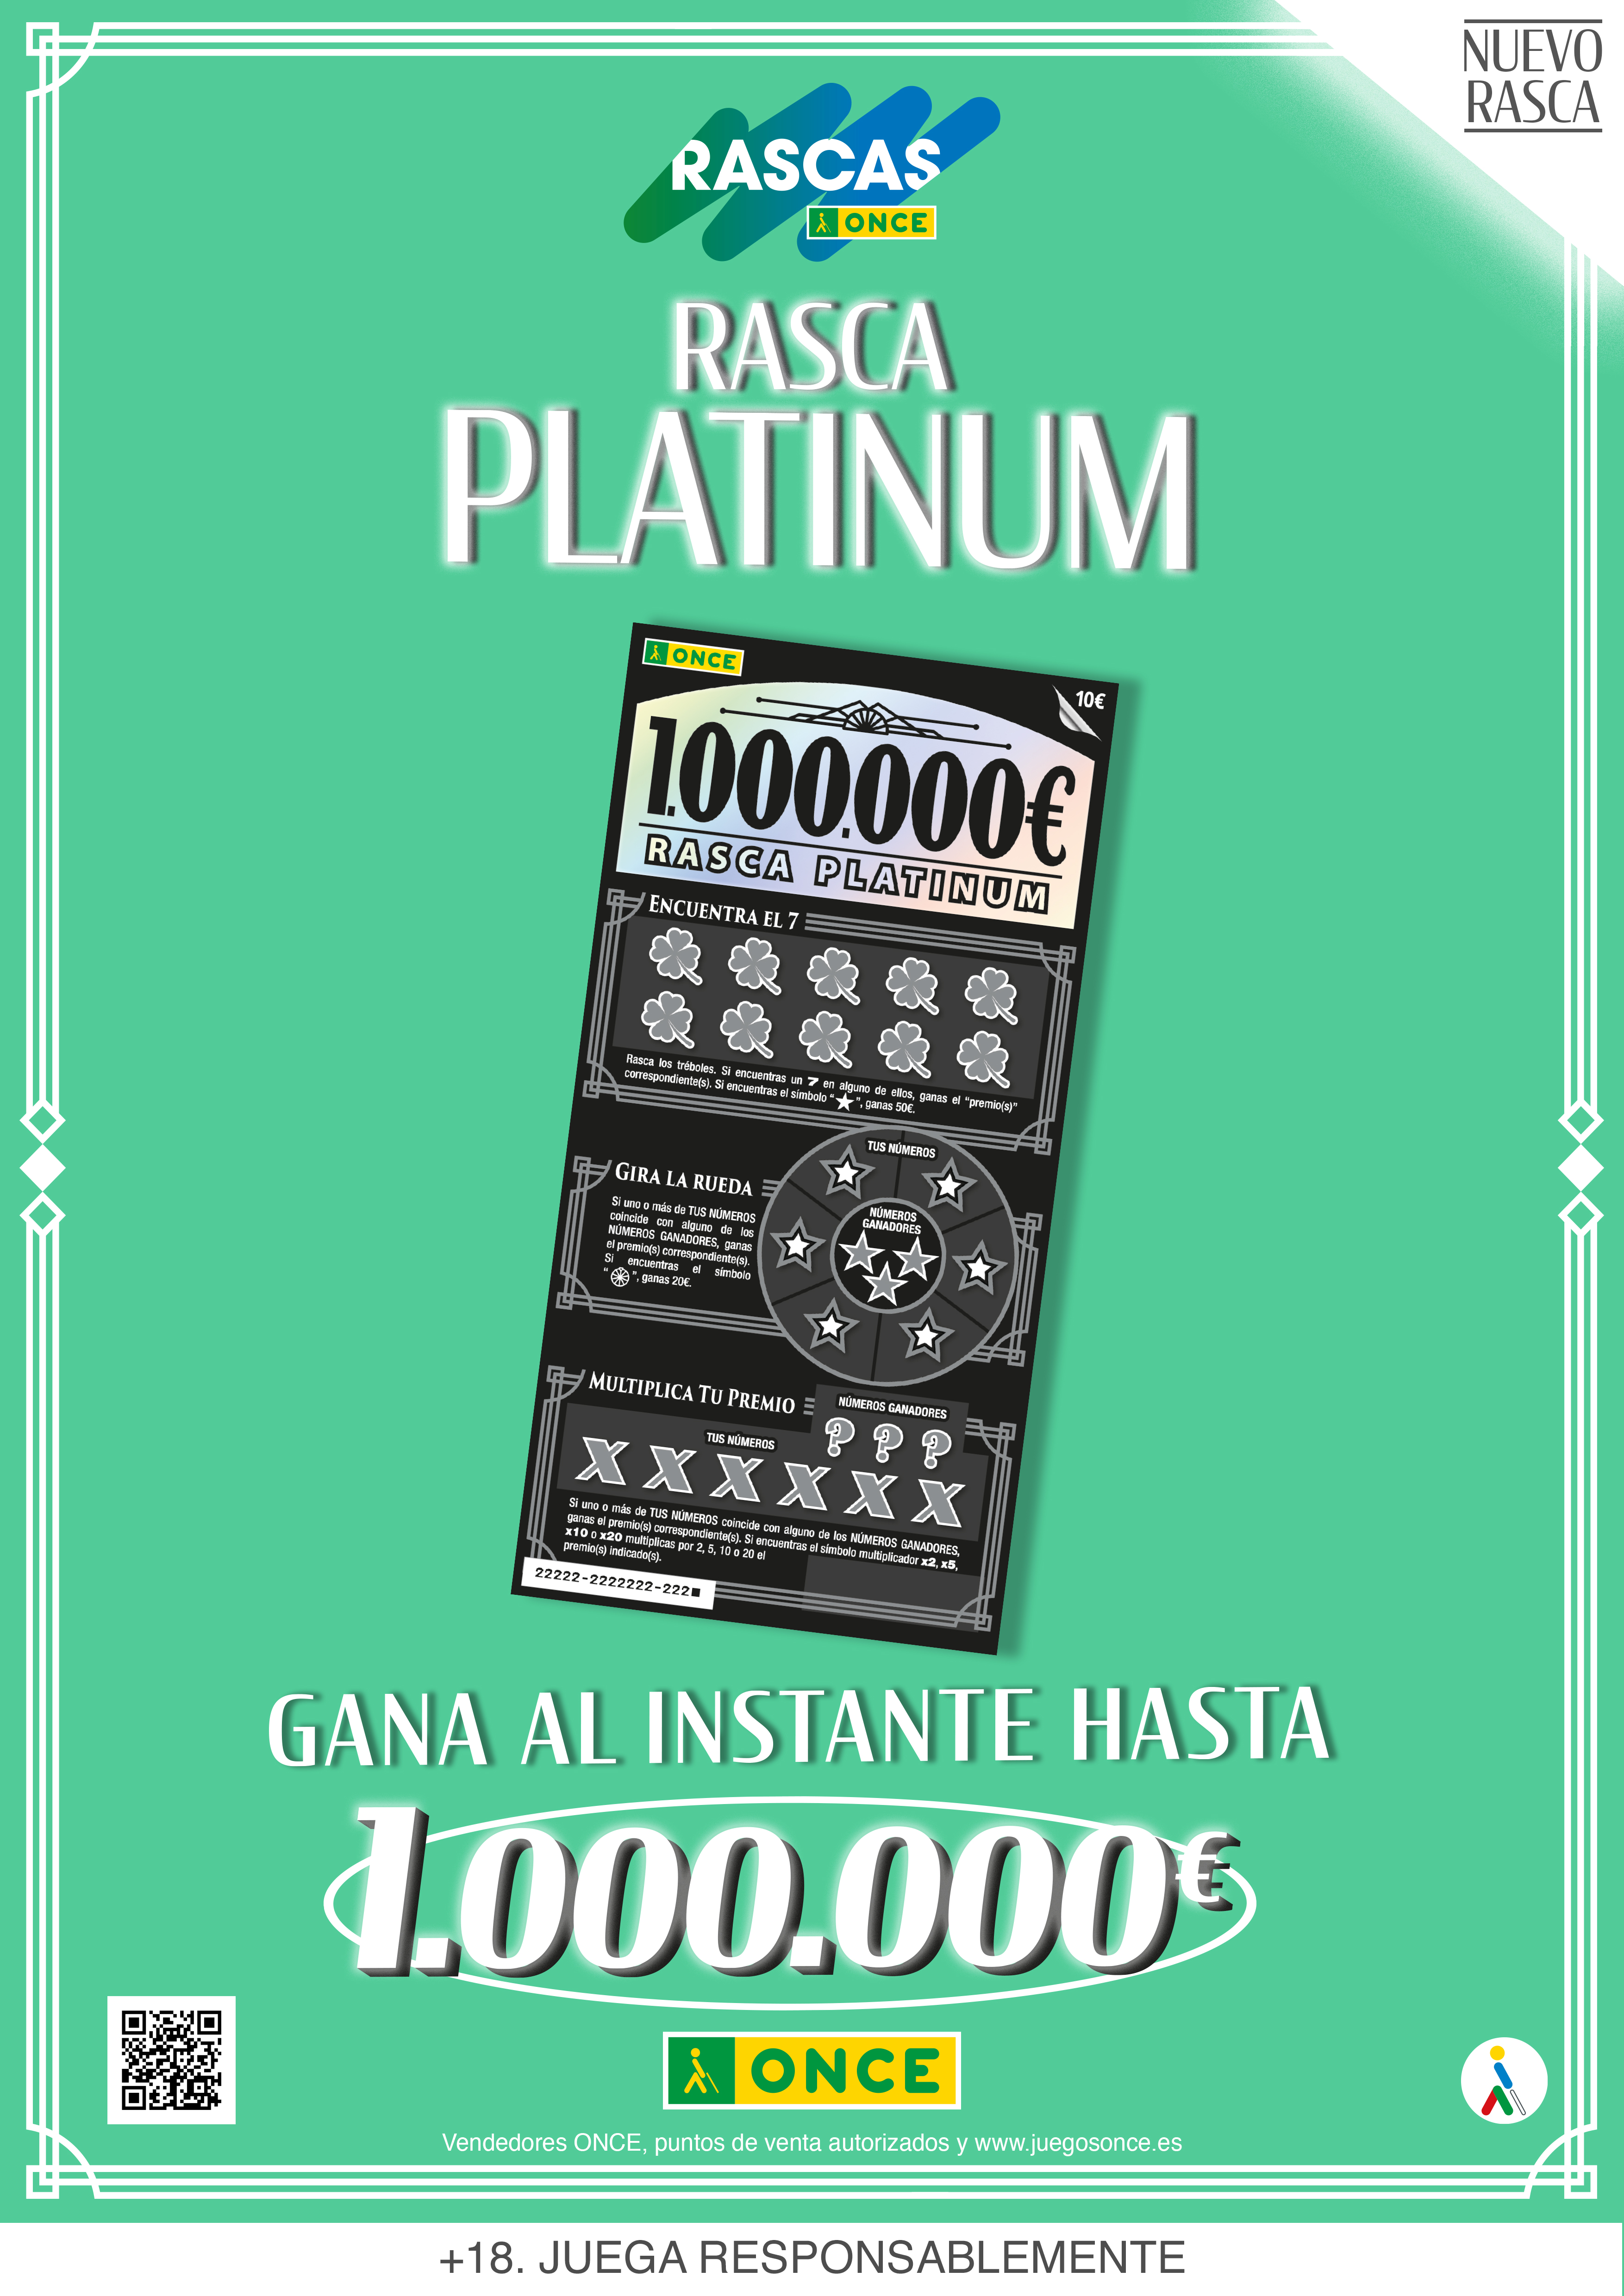 Campaña Rasca Platinum